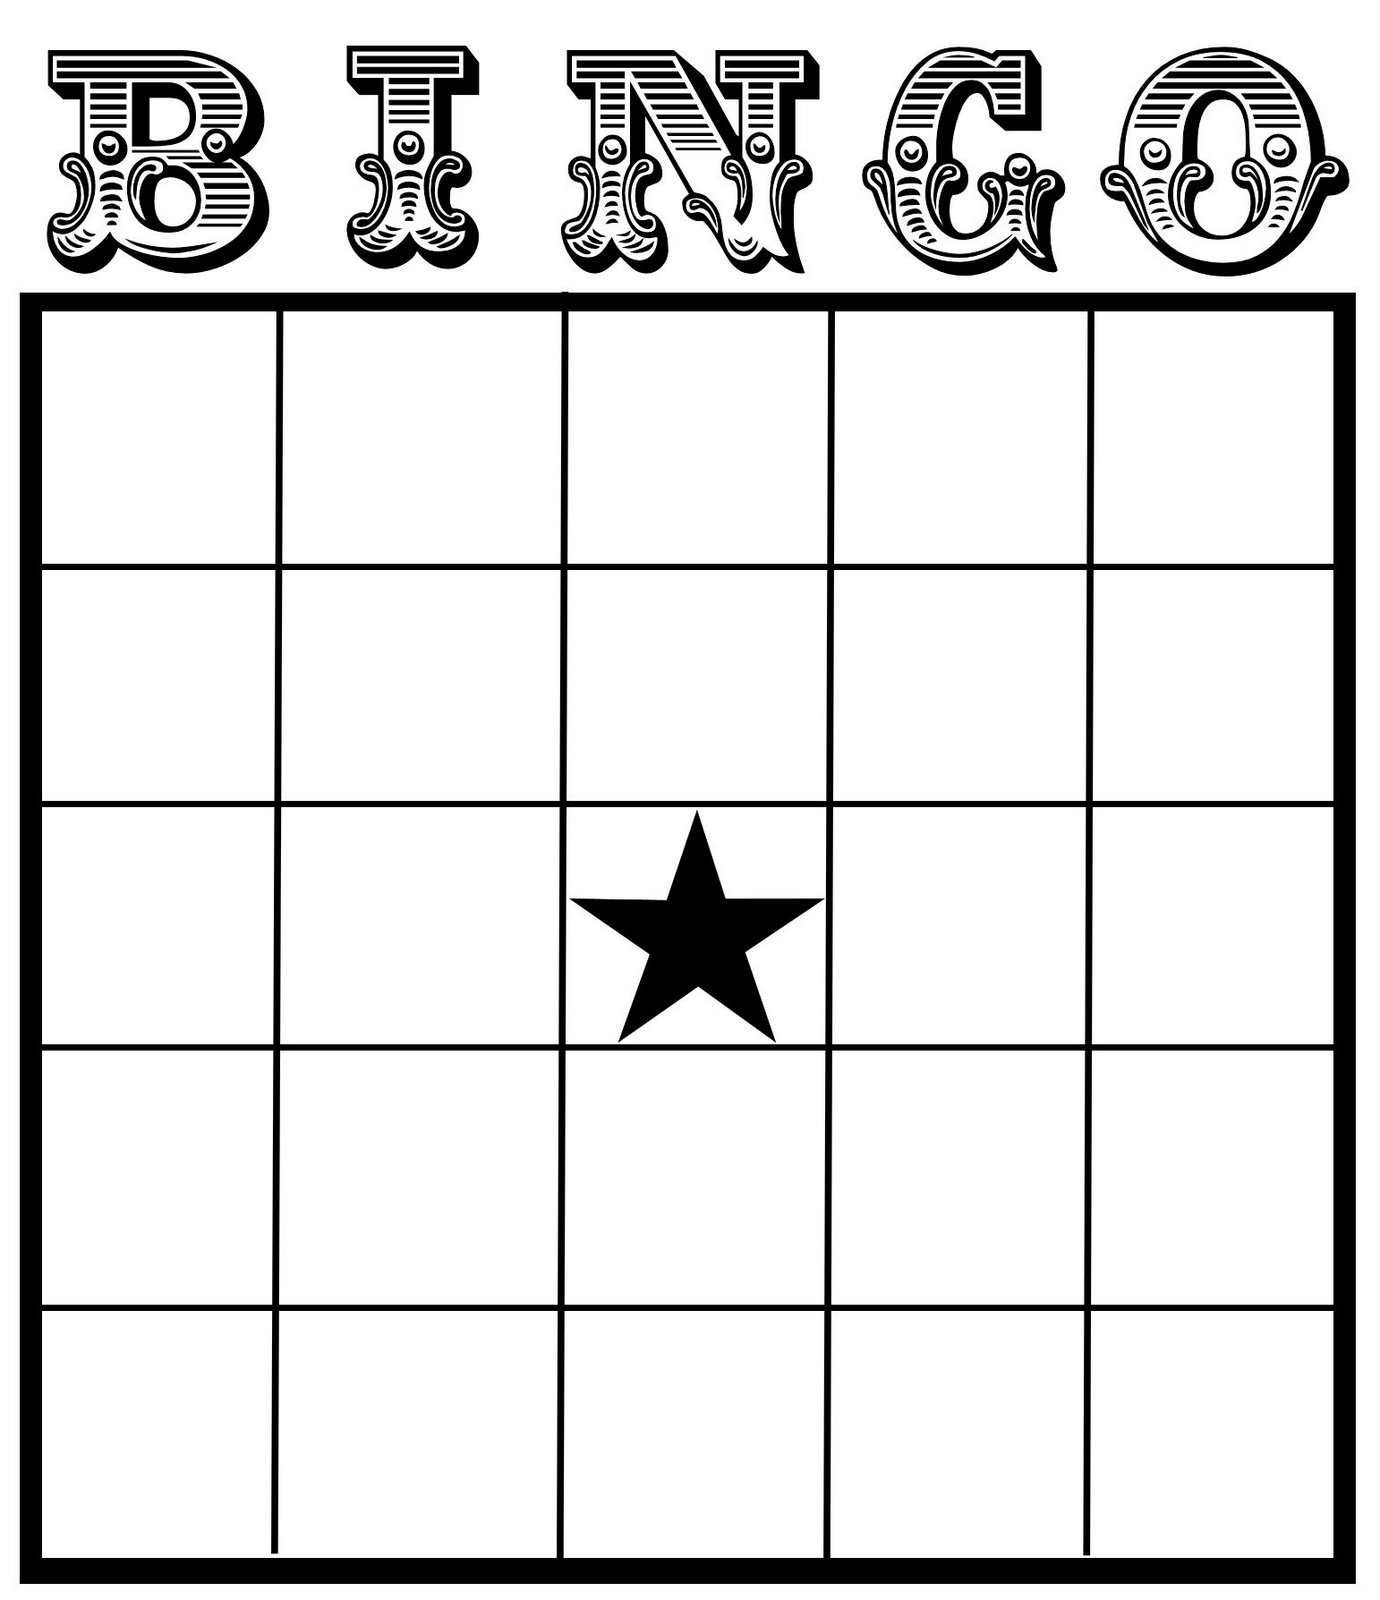 11-best-images-of-excel-bingo-card-printable-template-printable-blank-bingo-cards-template